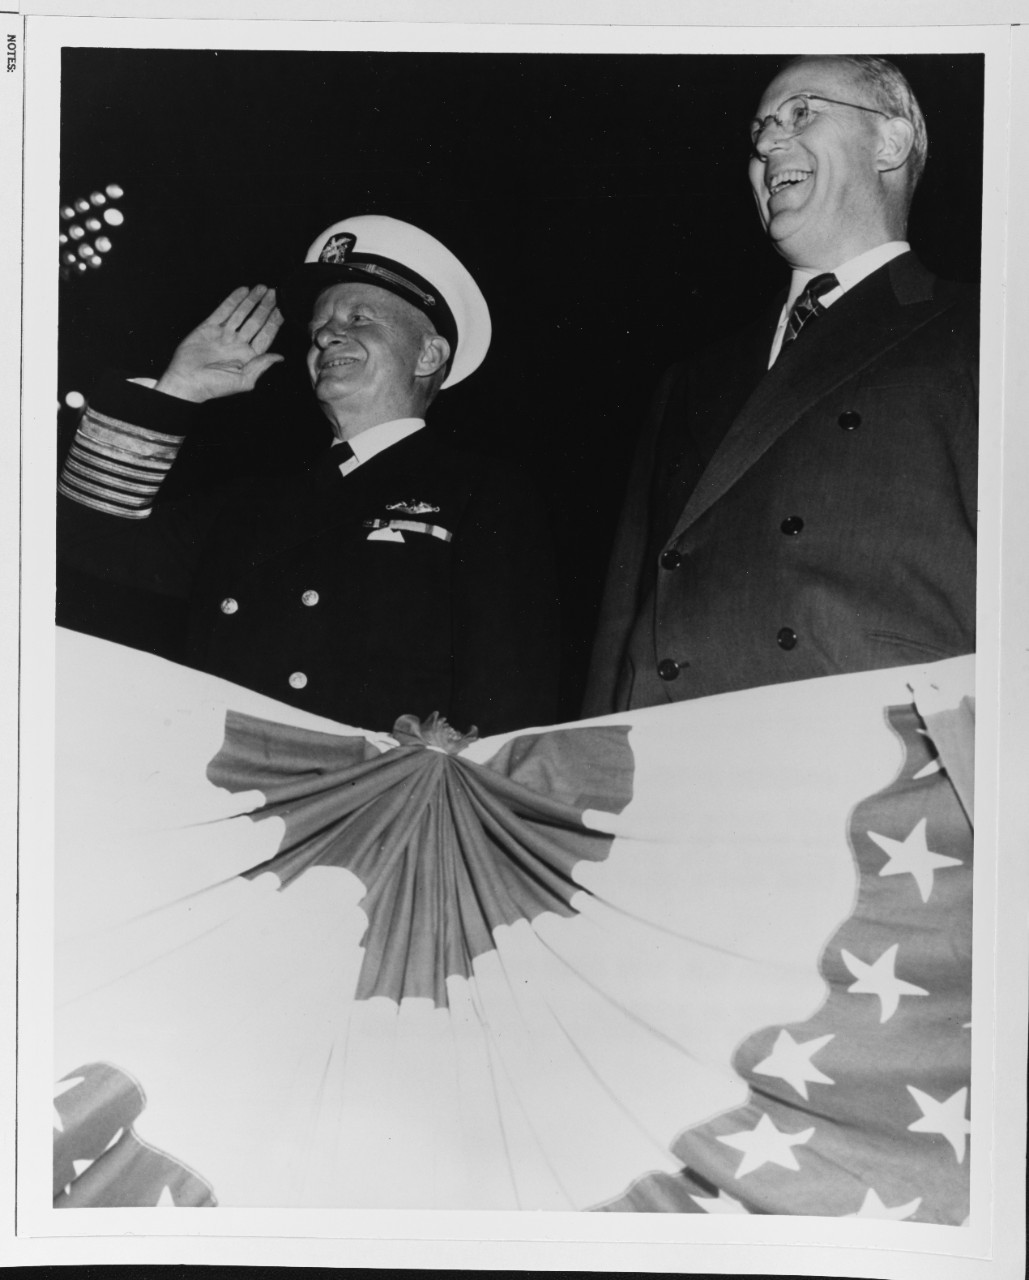 Fleet Admiral Nimitz and Governor Warren Greet the Crowd